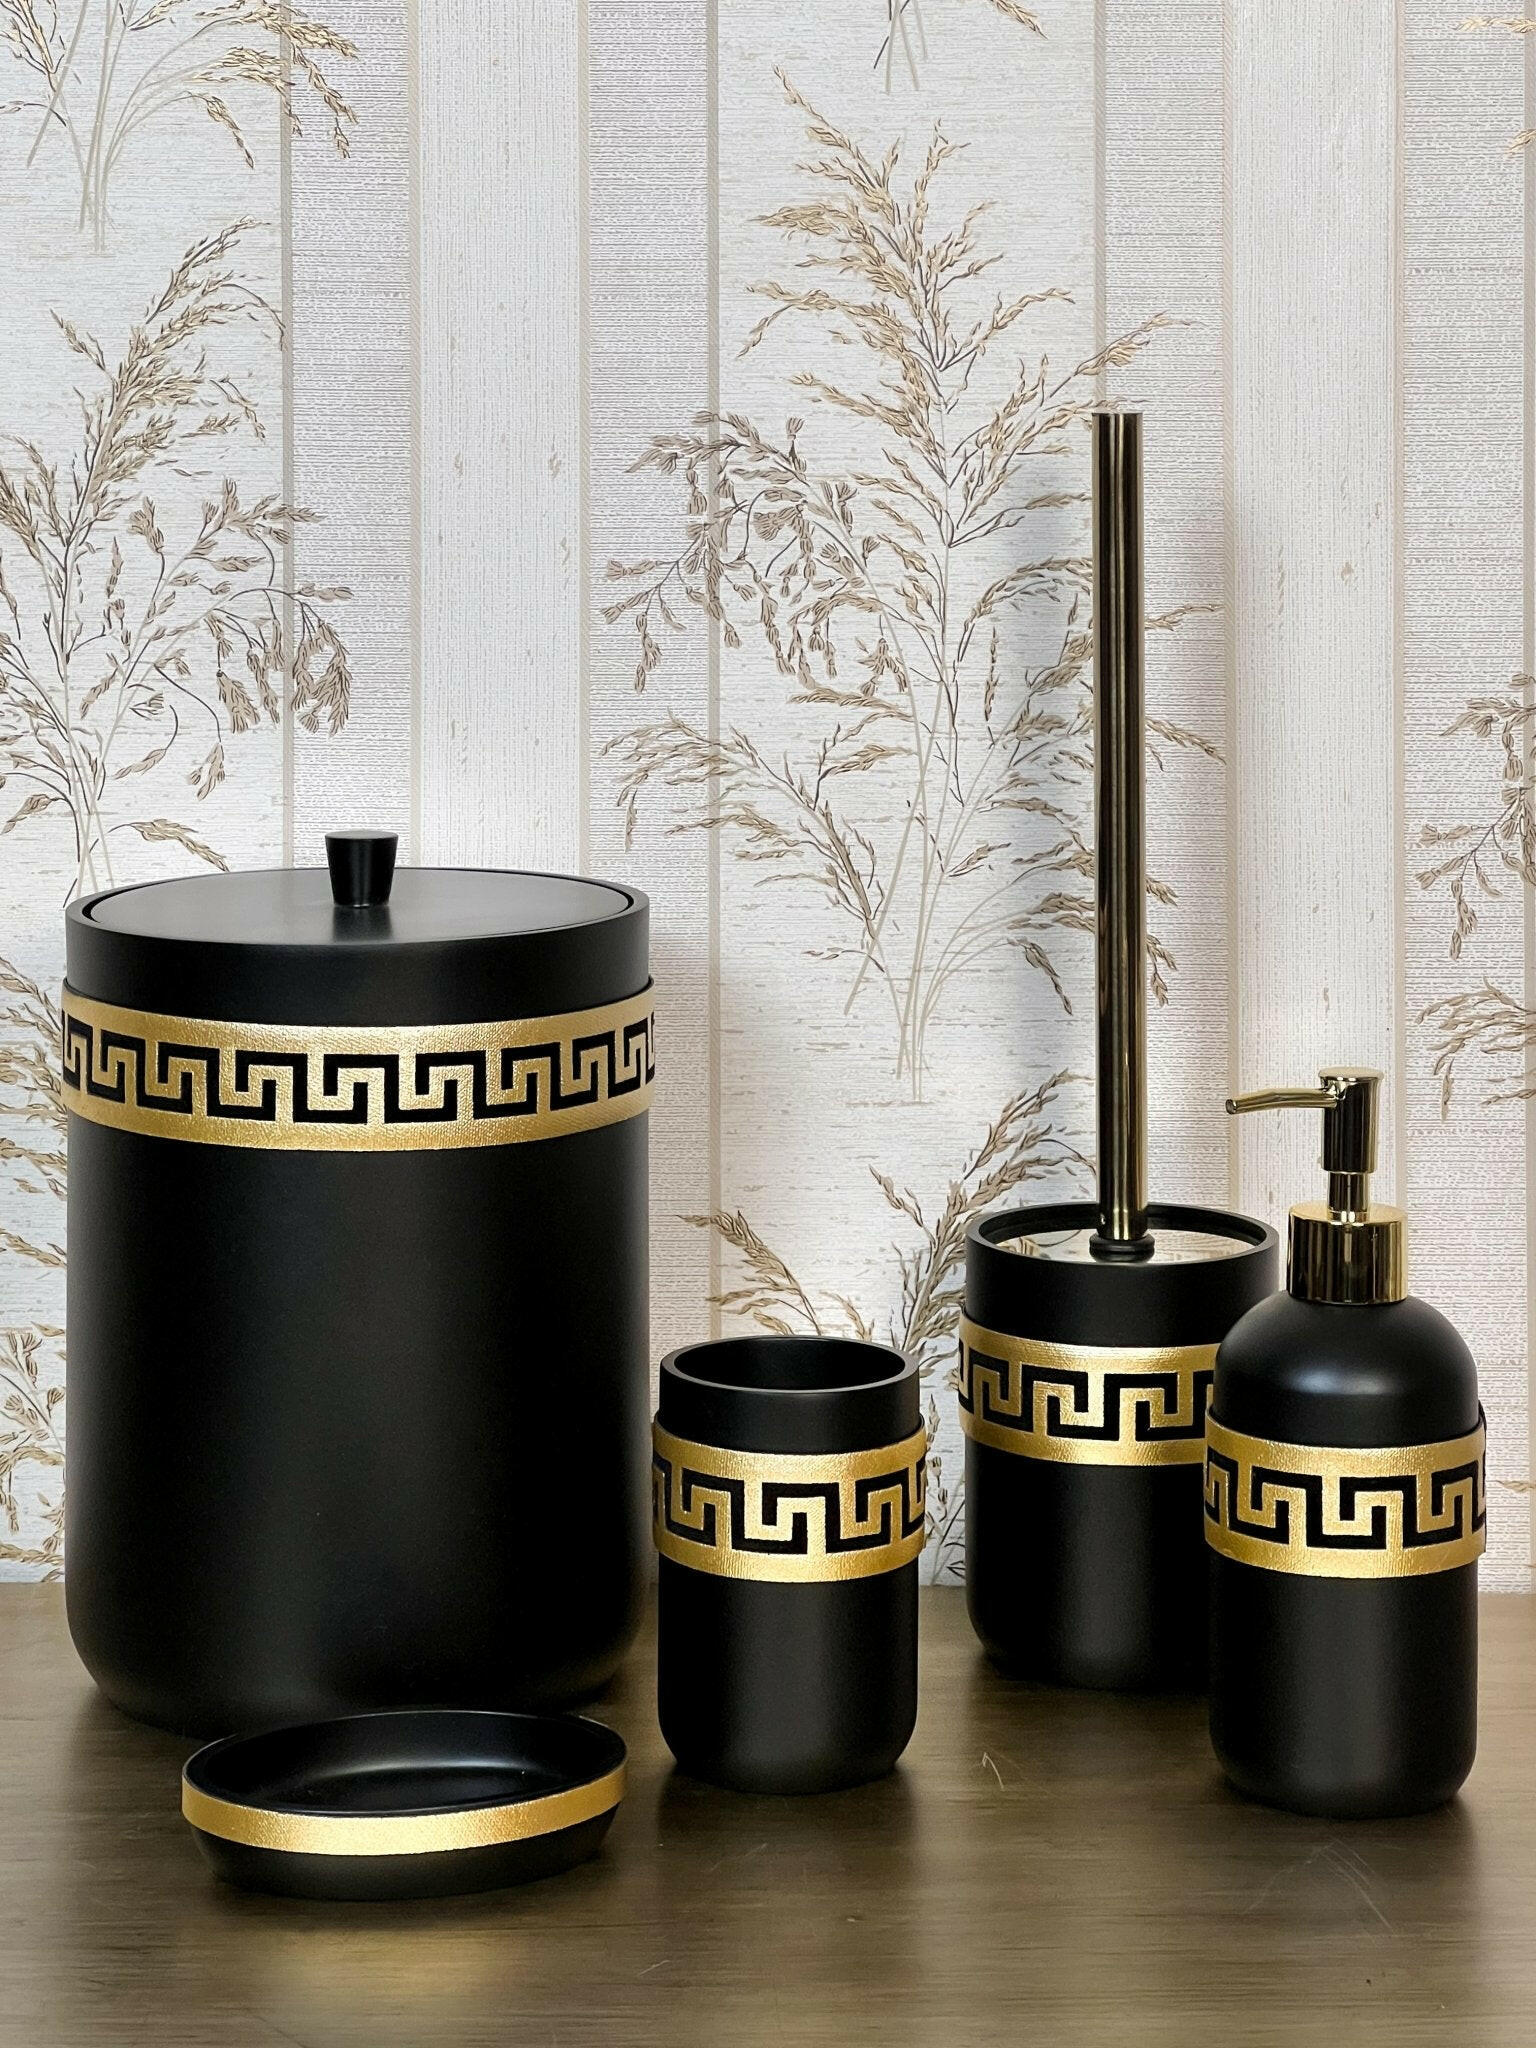 Anka Bathroom Set - Creative Home, Resin Black & Gold Bathroom Accessory Sets, Versace Style Greek Key Patterned Black & Gold Bathroom Decor